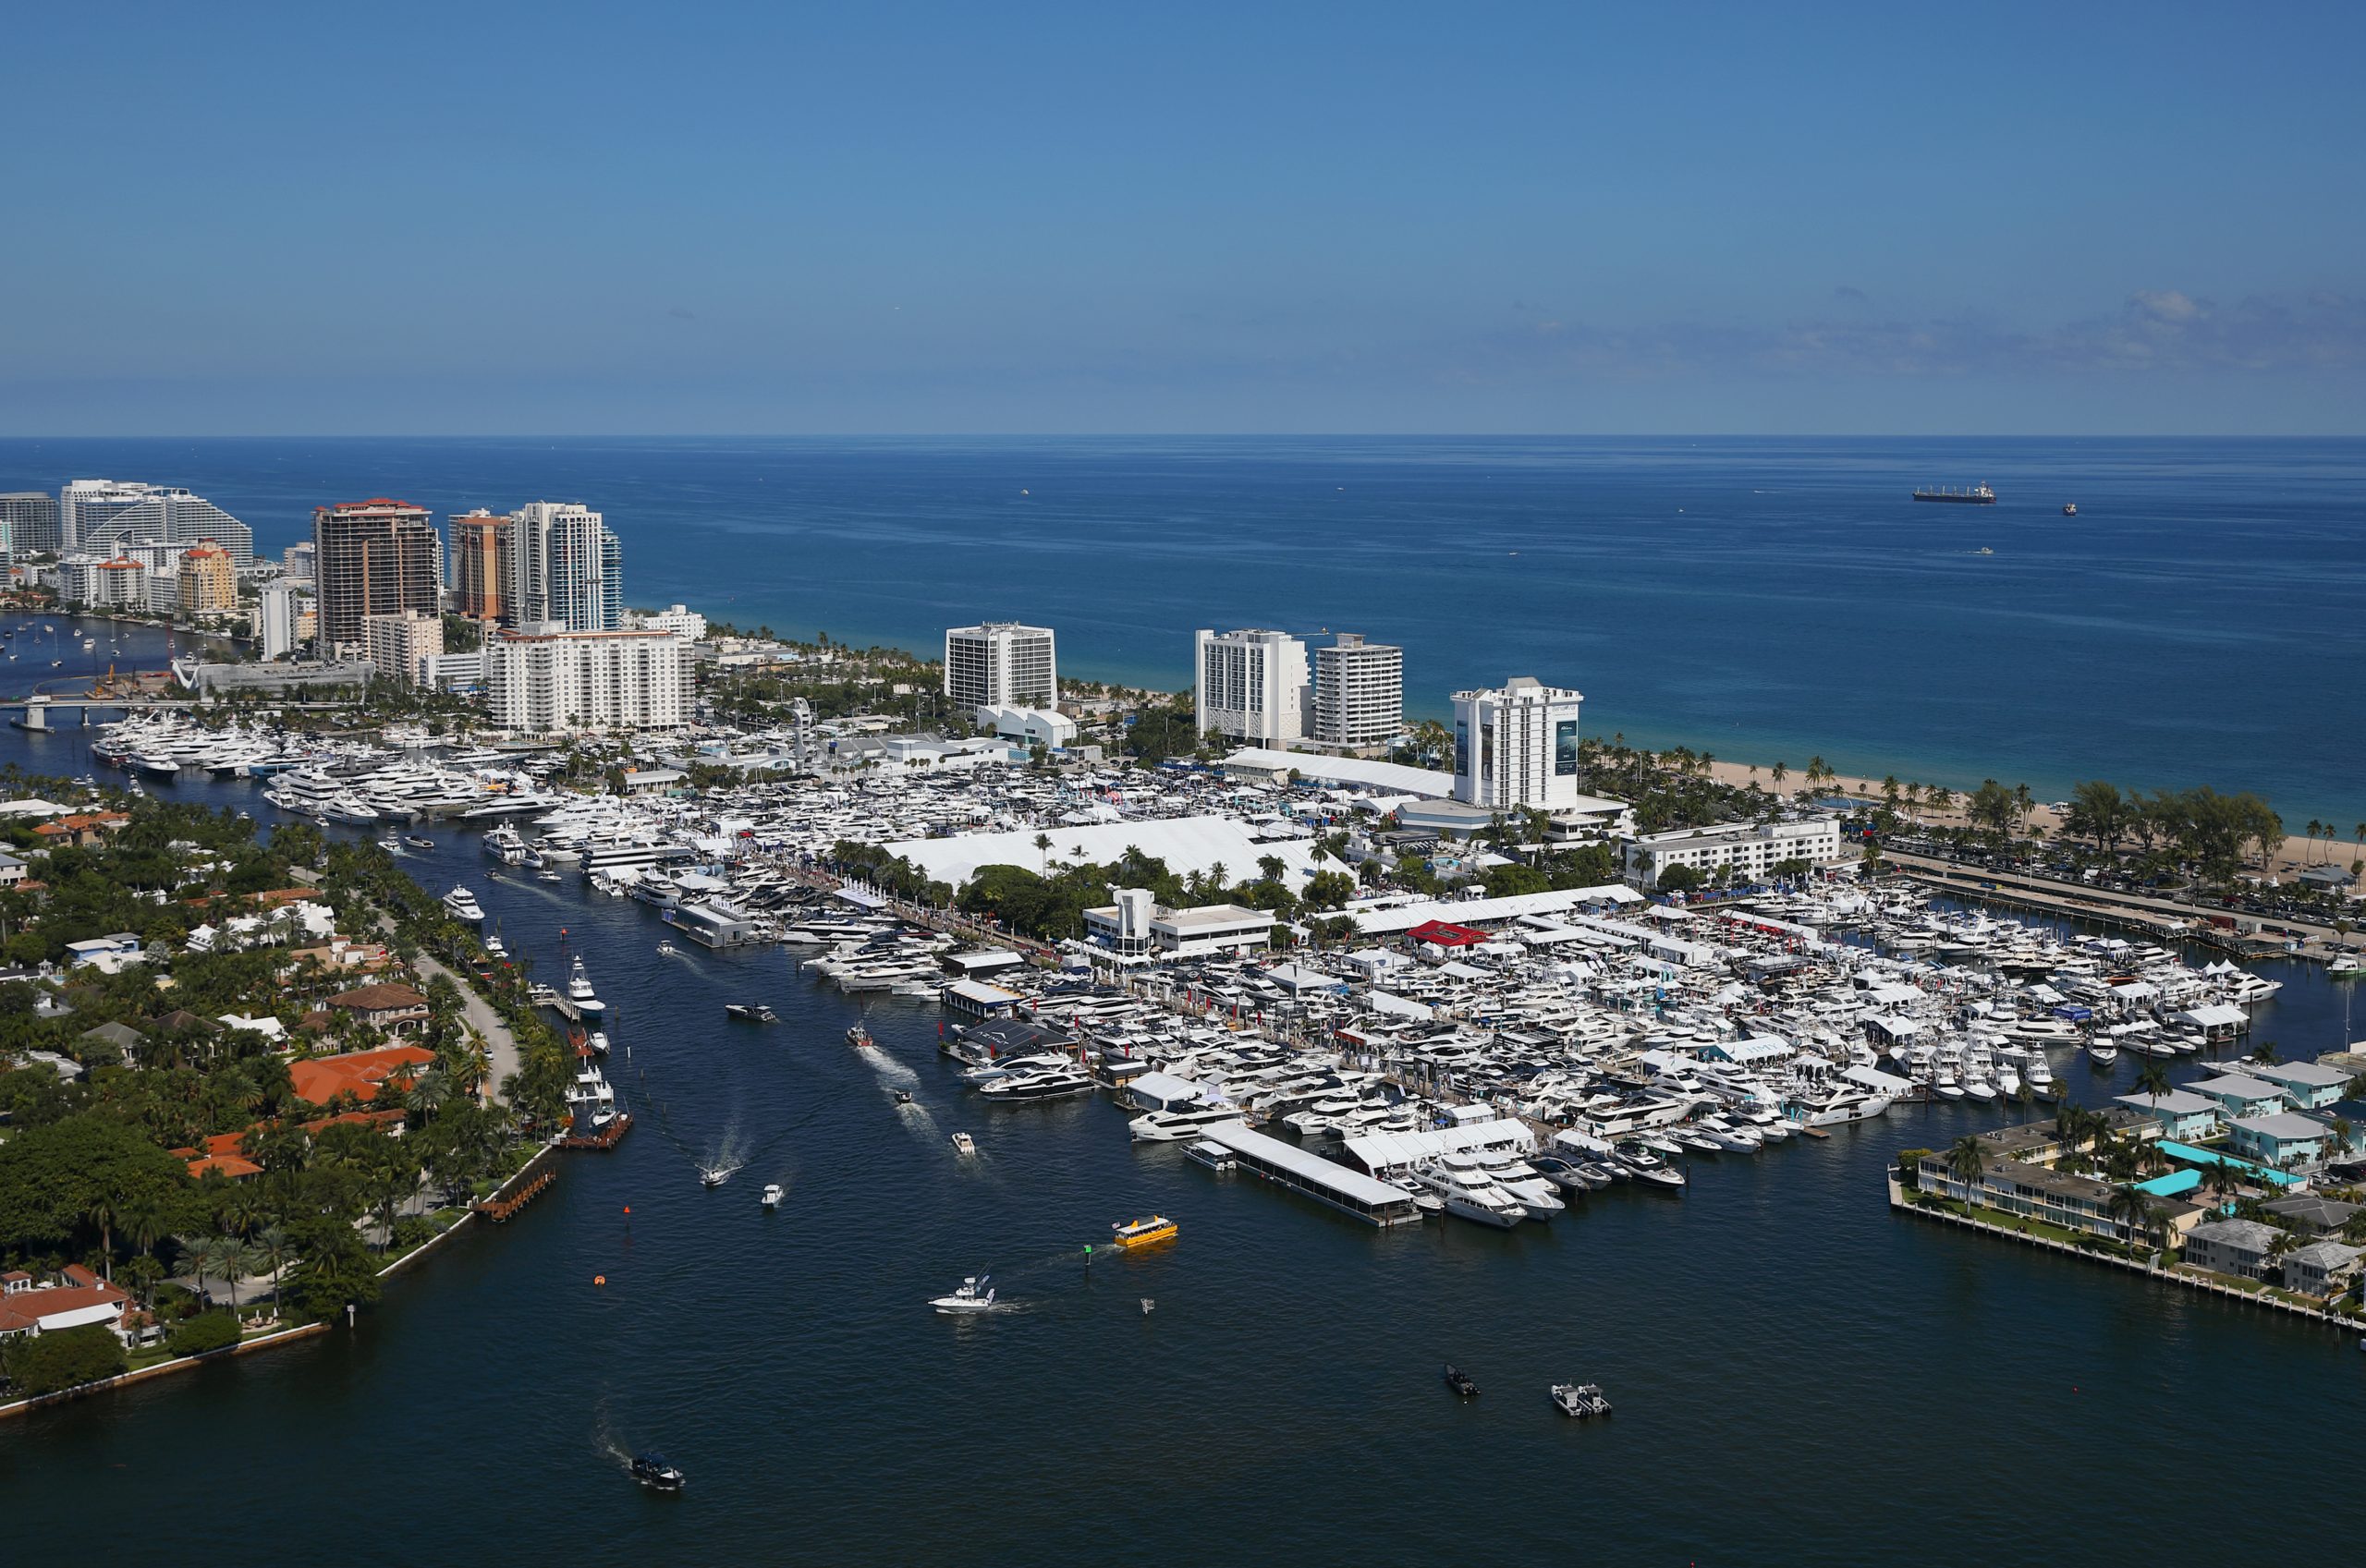 2024 Fort Lauderdale International Boat Show